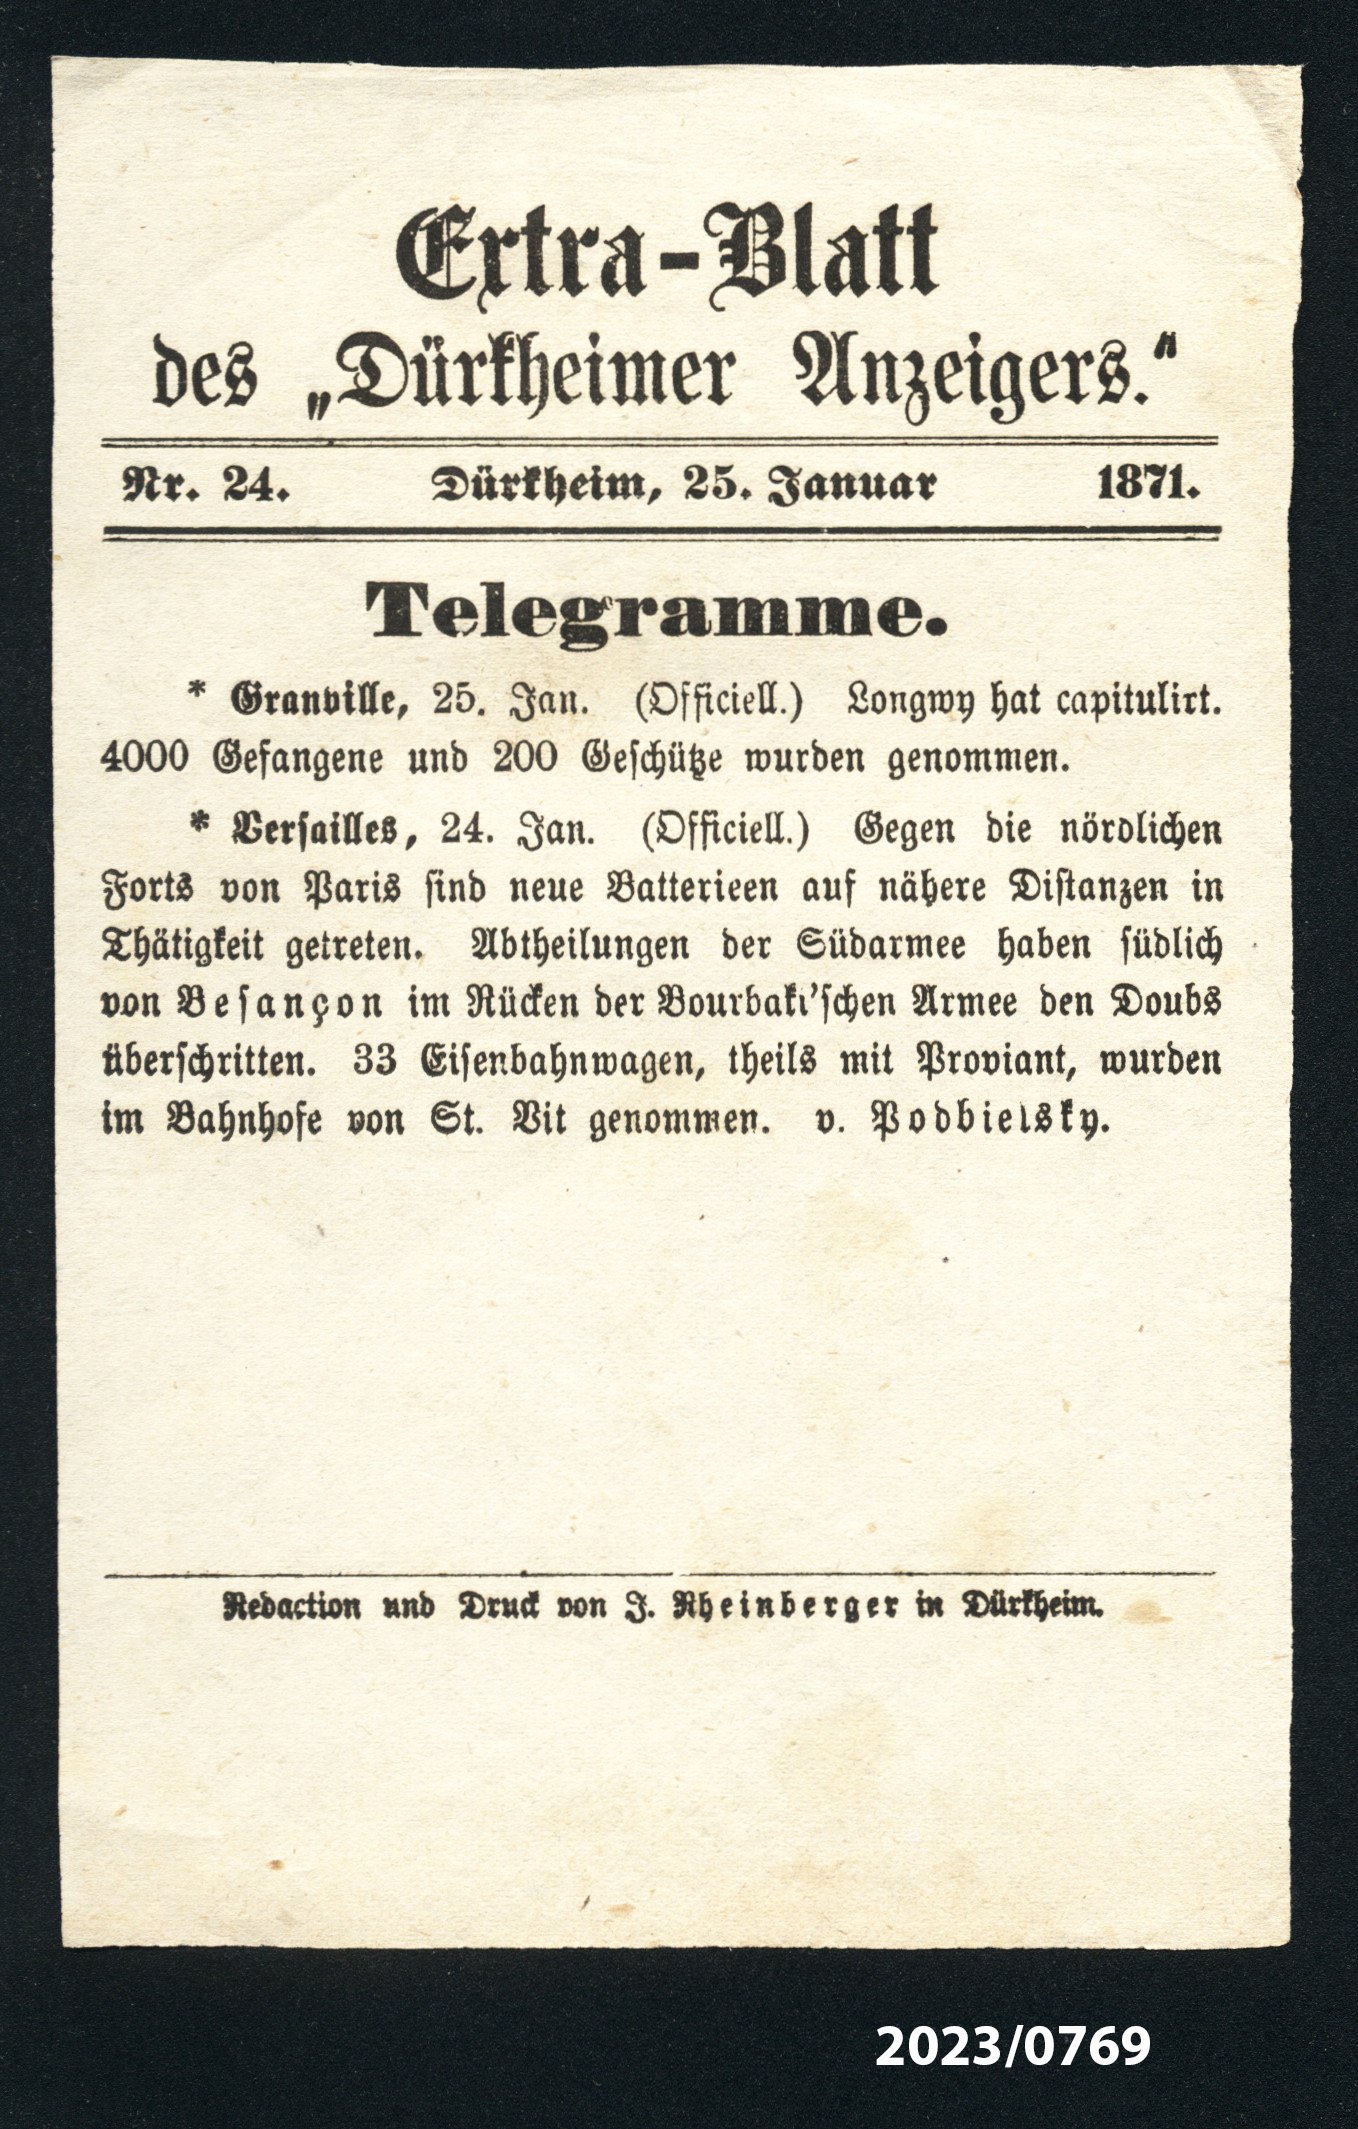 Extra-Blatt des "Dürkheimer Anzeigers." Nr. 24, 25.1.1871 (Stadtmuseum Bad Dürkheim im Kulturzentrum Haus Catoir CC BY-NC-SA)